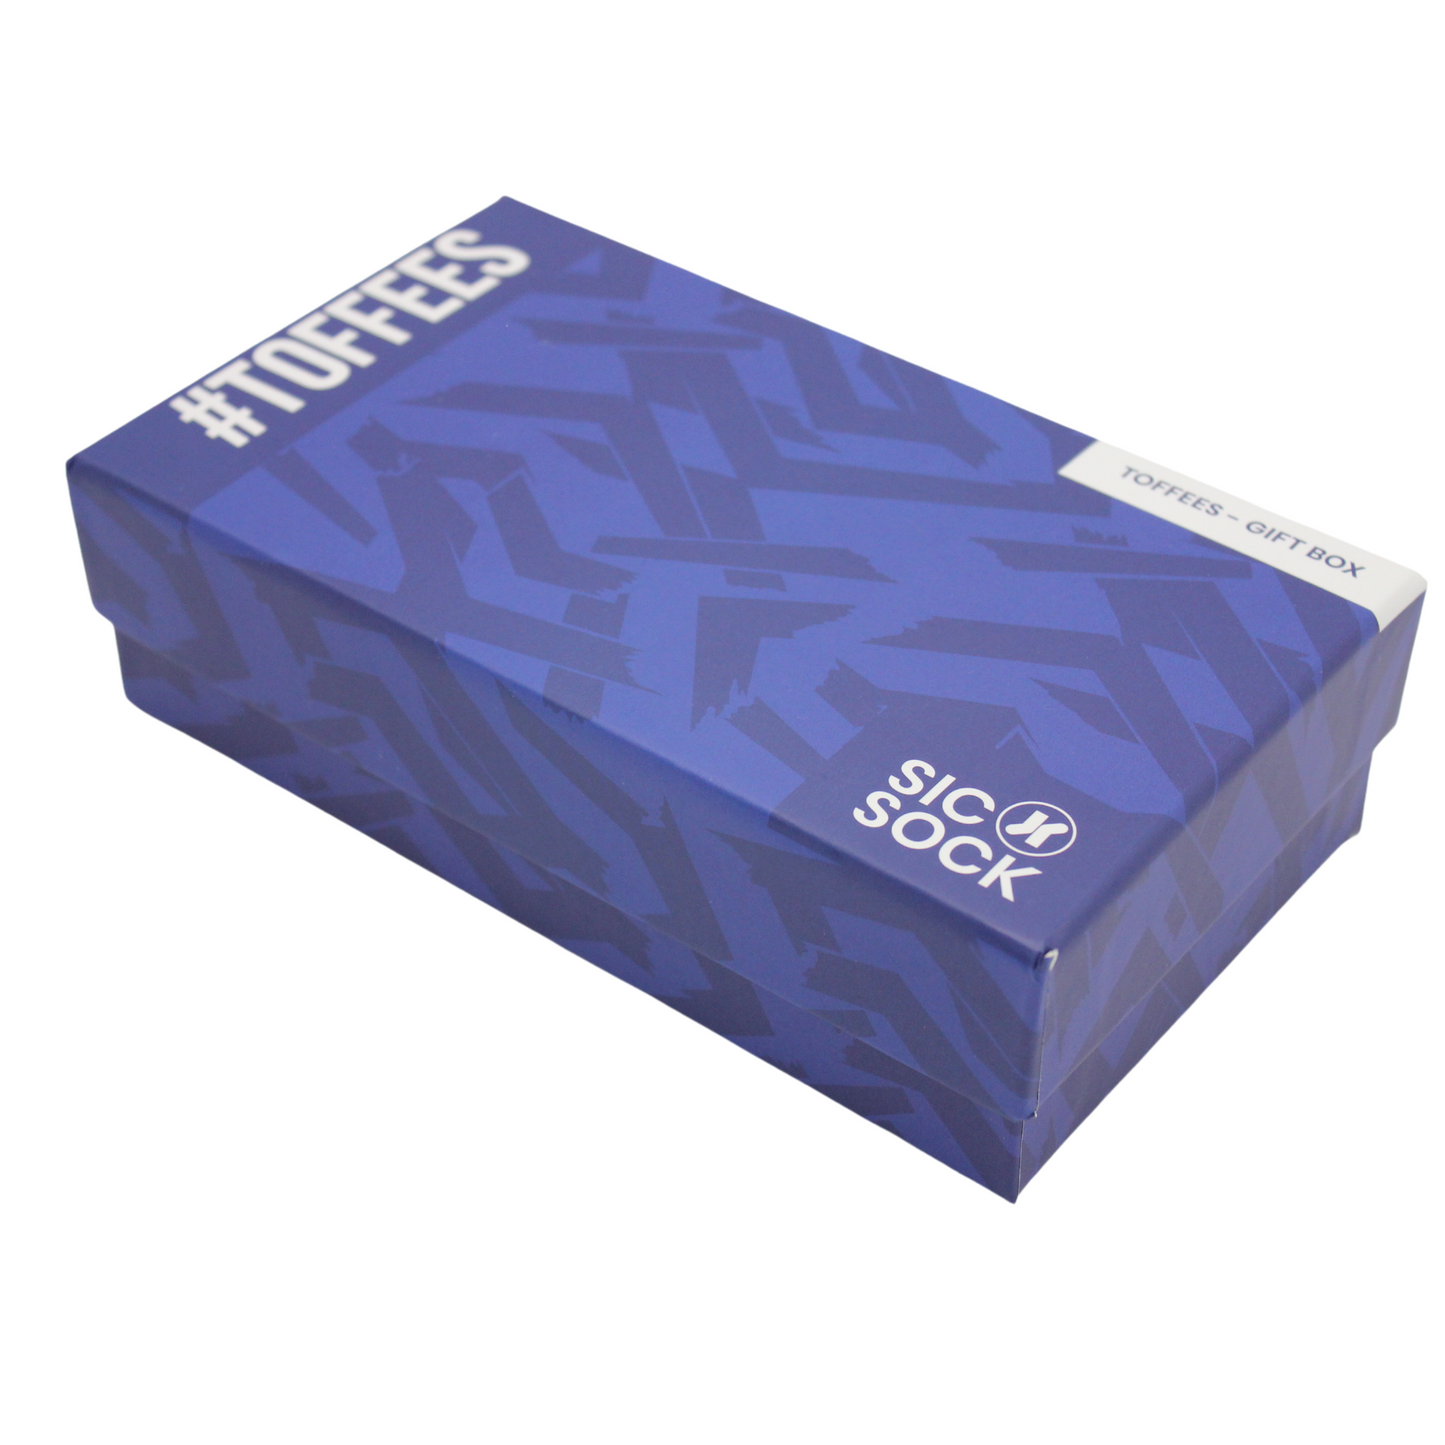 Toffees - Retro Shirt Sock Gift Box | Size UK 7 - 11